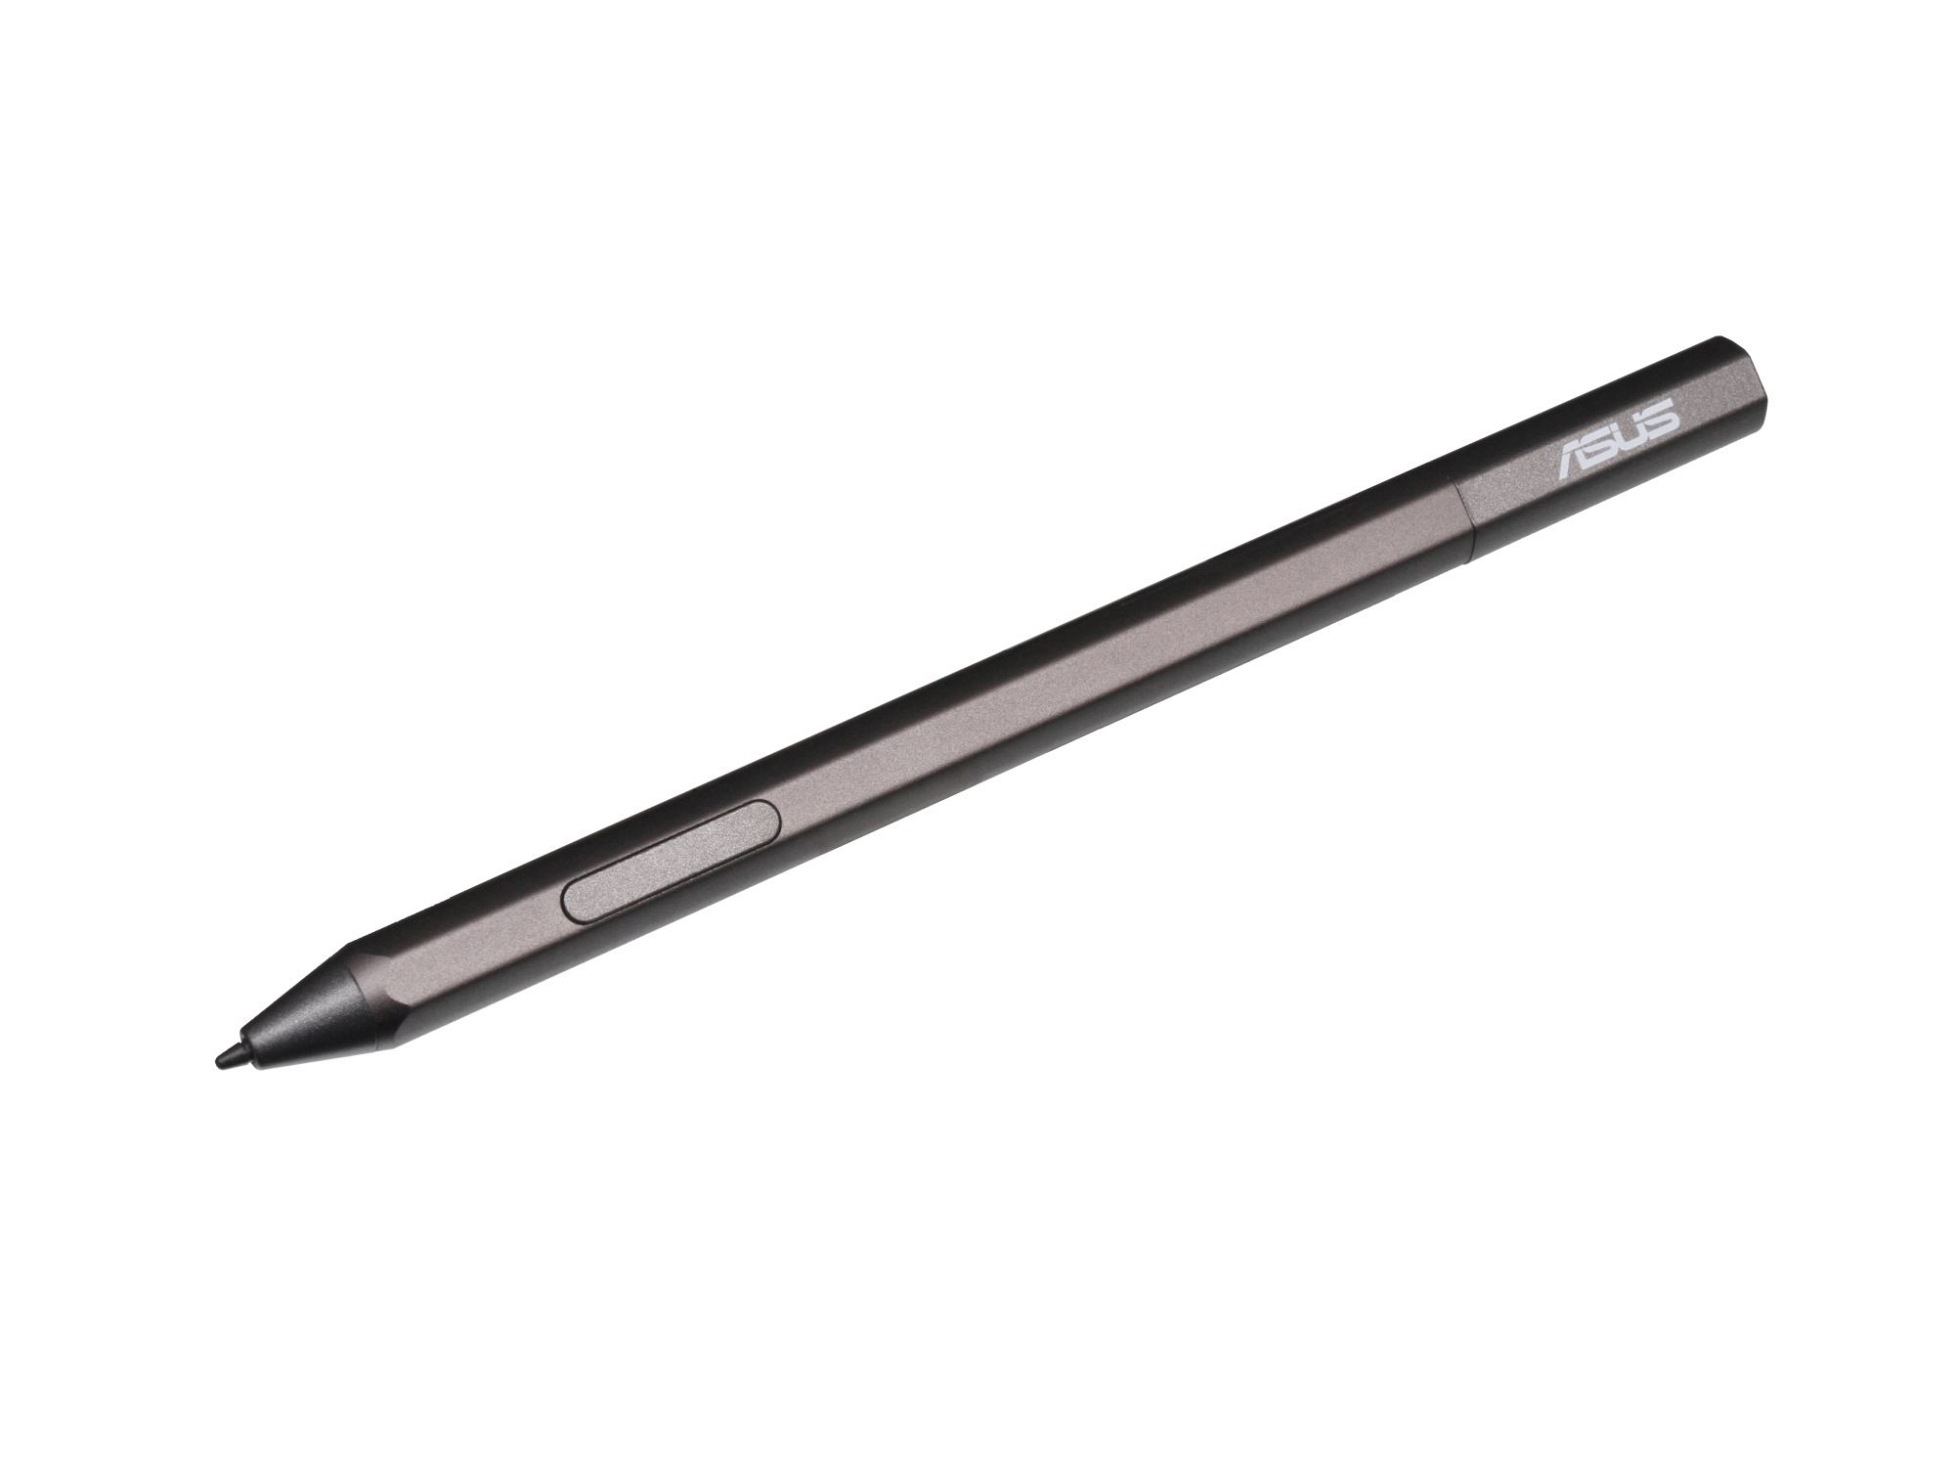 Asus 04190-00210000 Pen SA201H MPP 2.0 inkl. Batterien